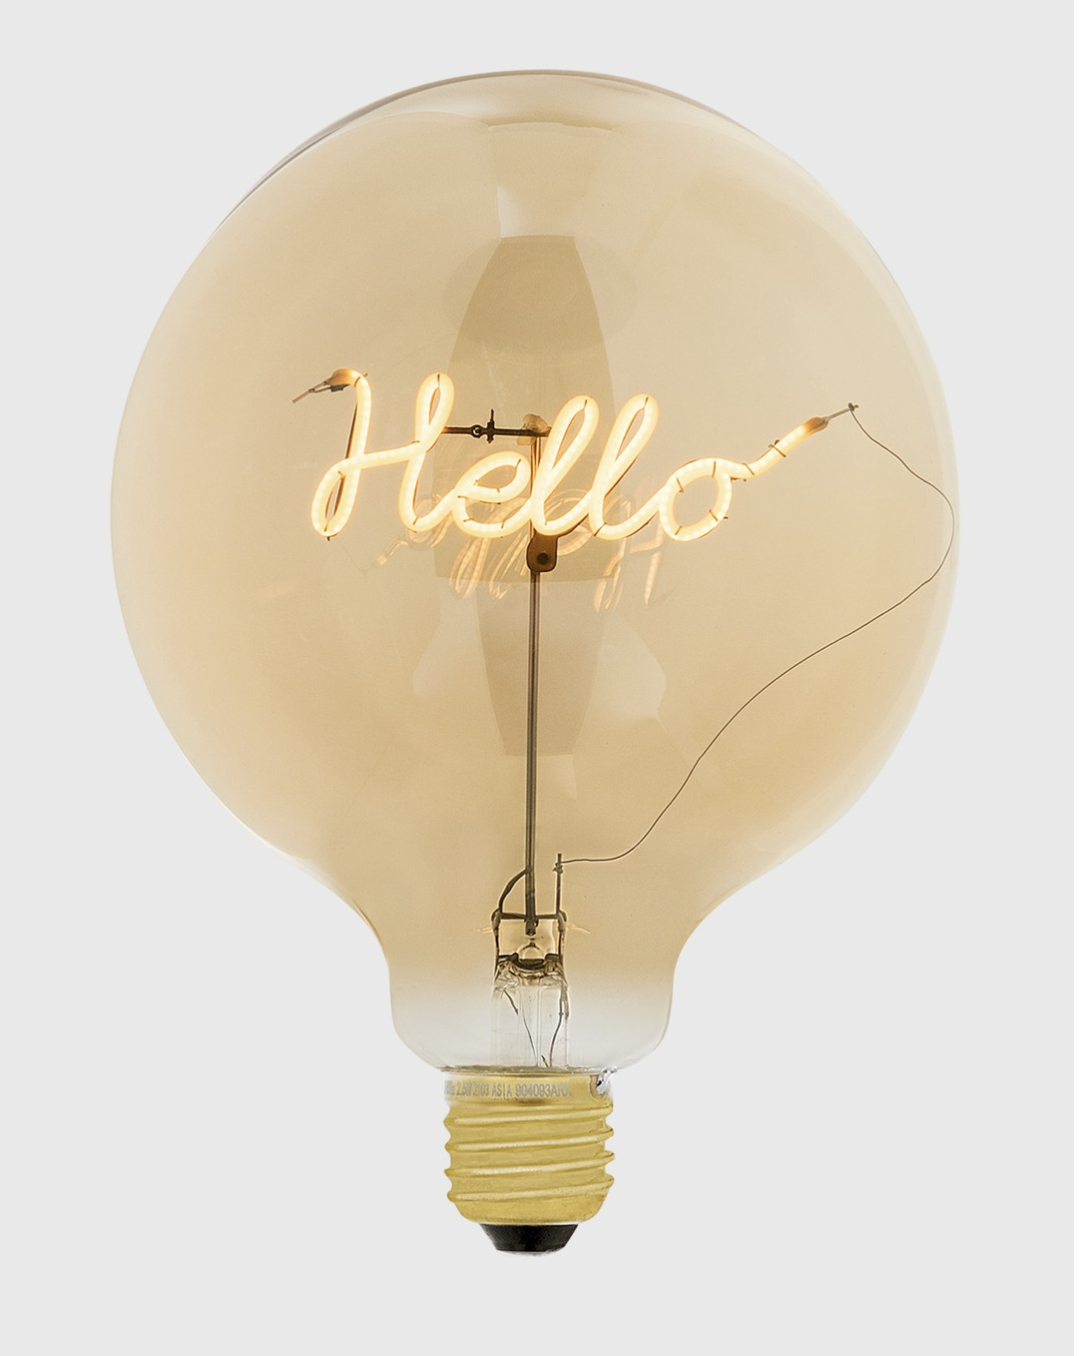 Hello Light Bulb